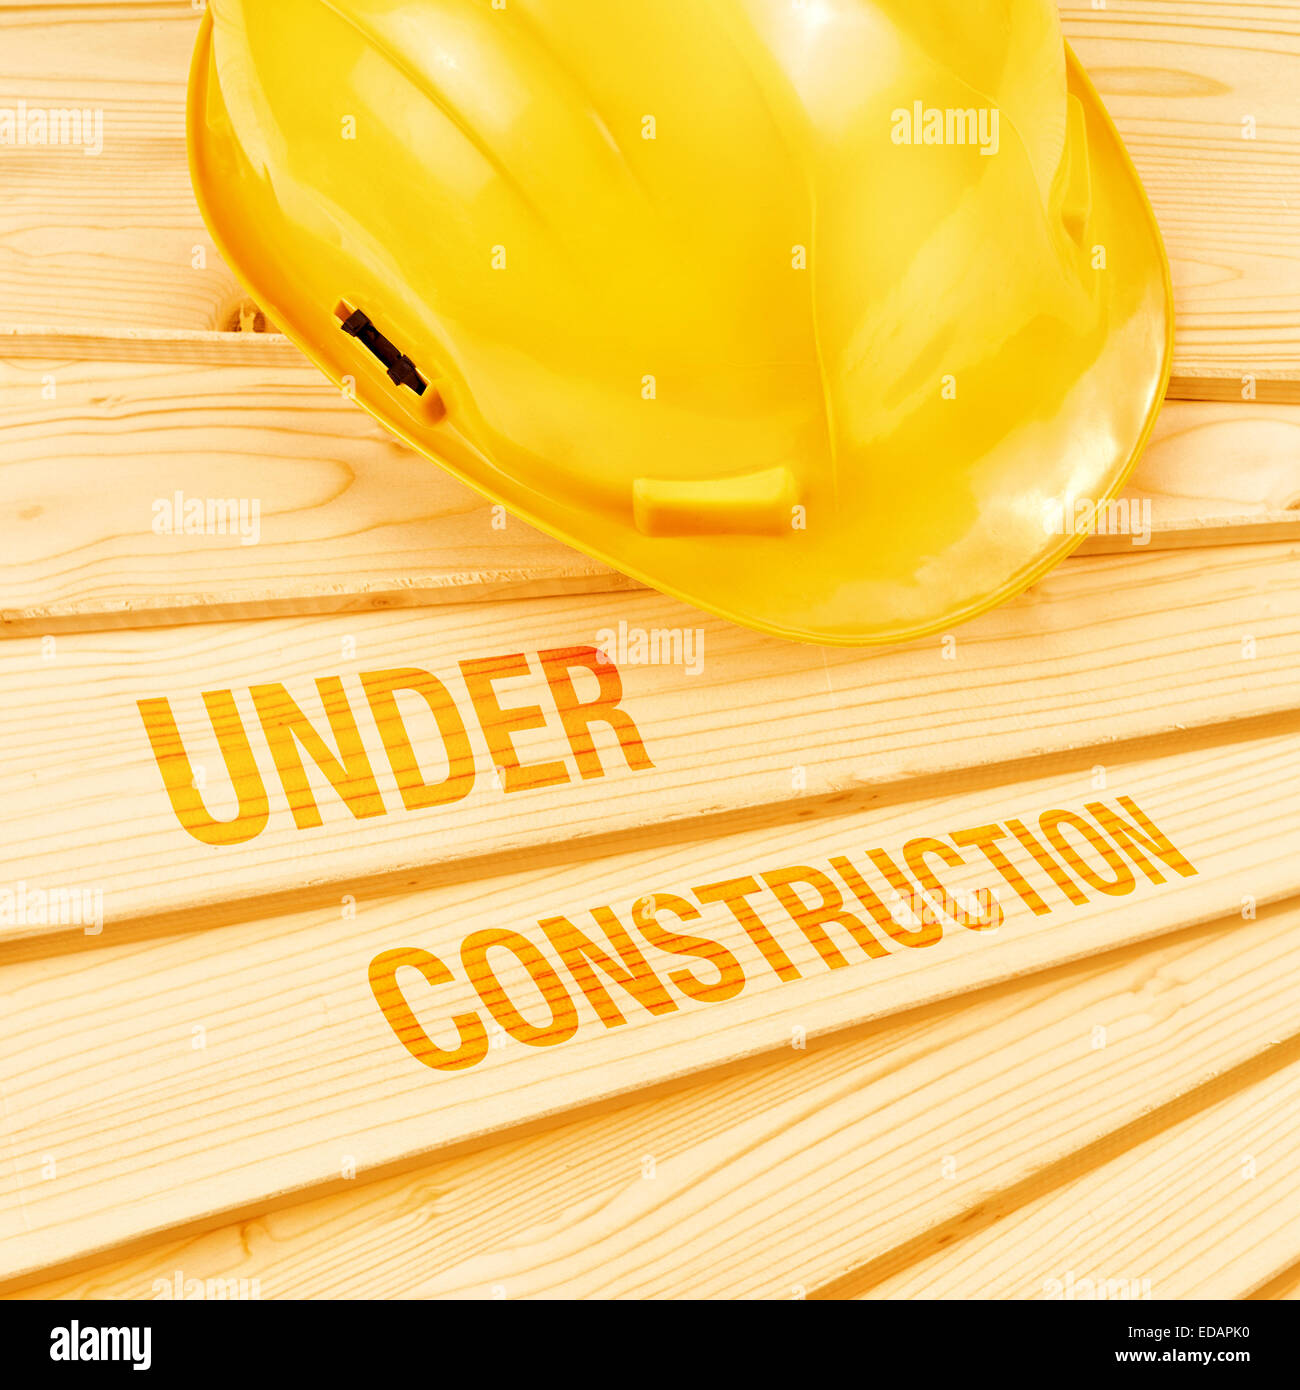 Under construction concept, Yellow hardhat on pine wood planks. Stock Photo